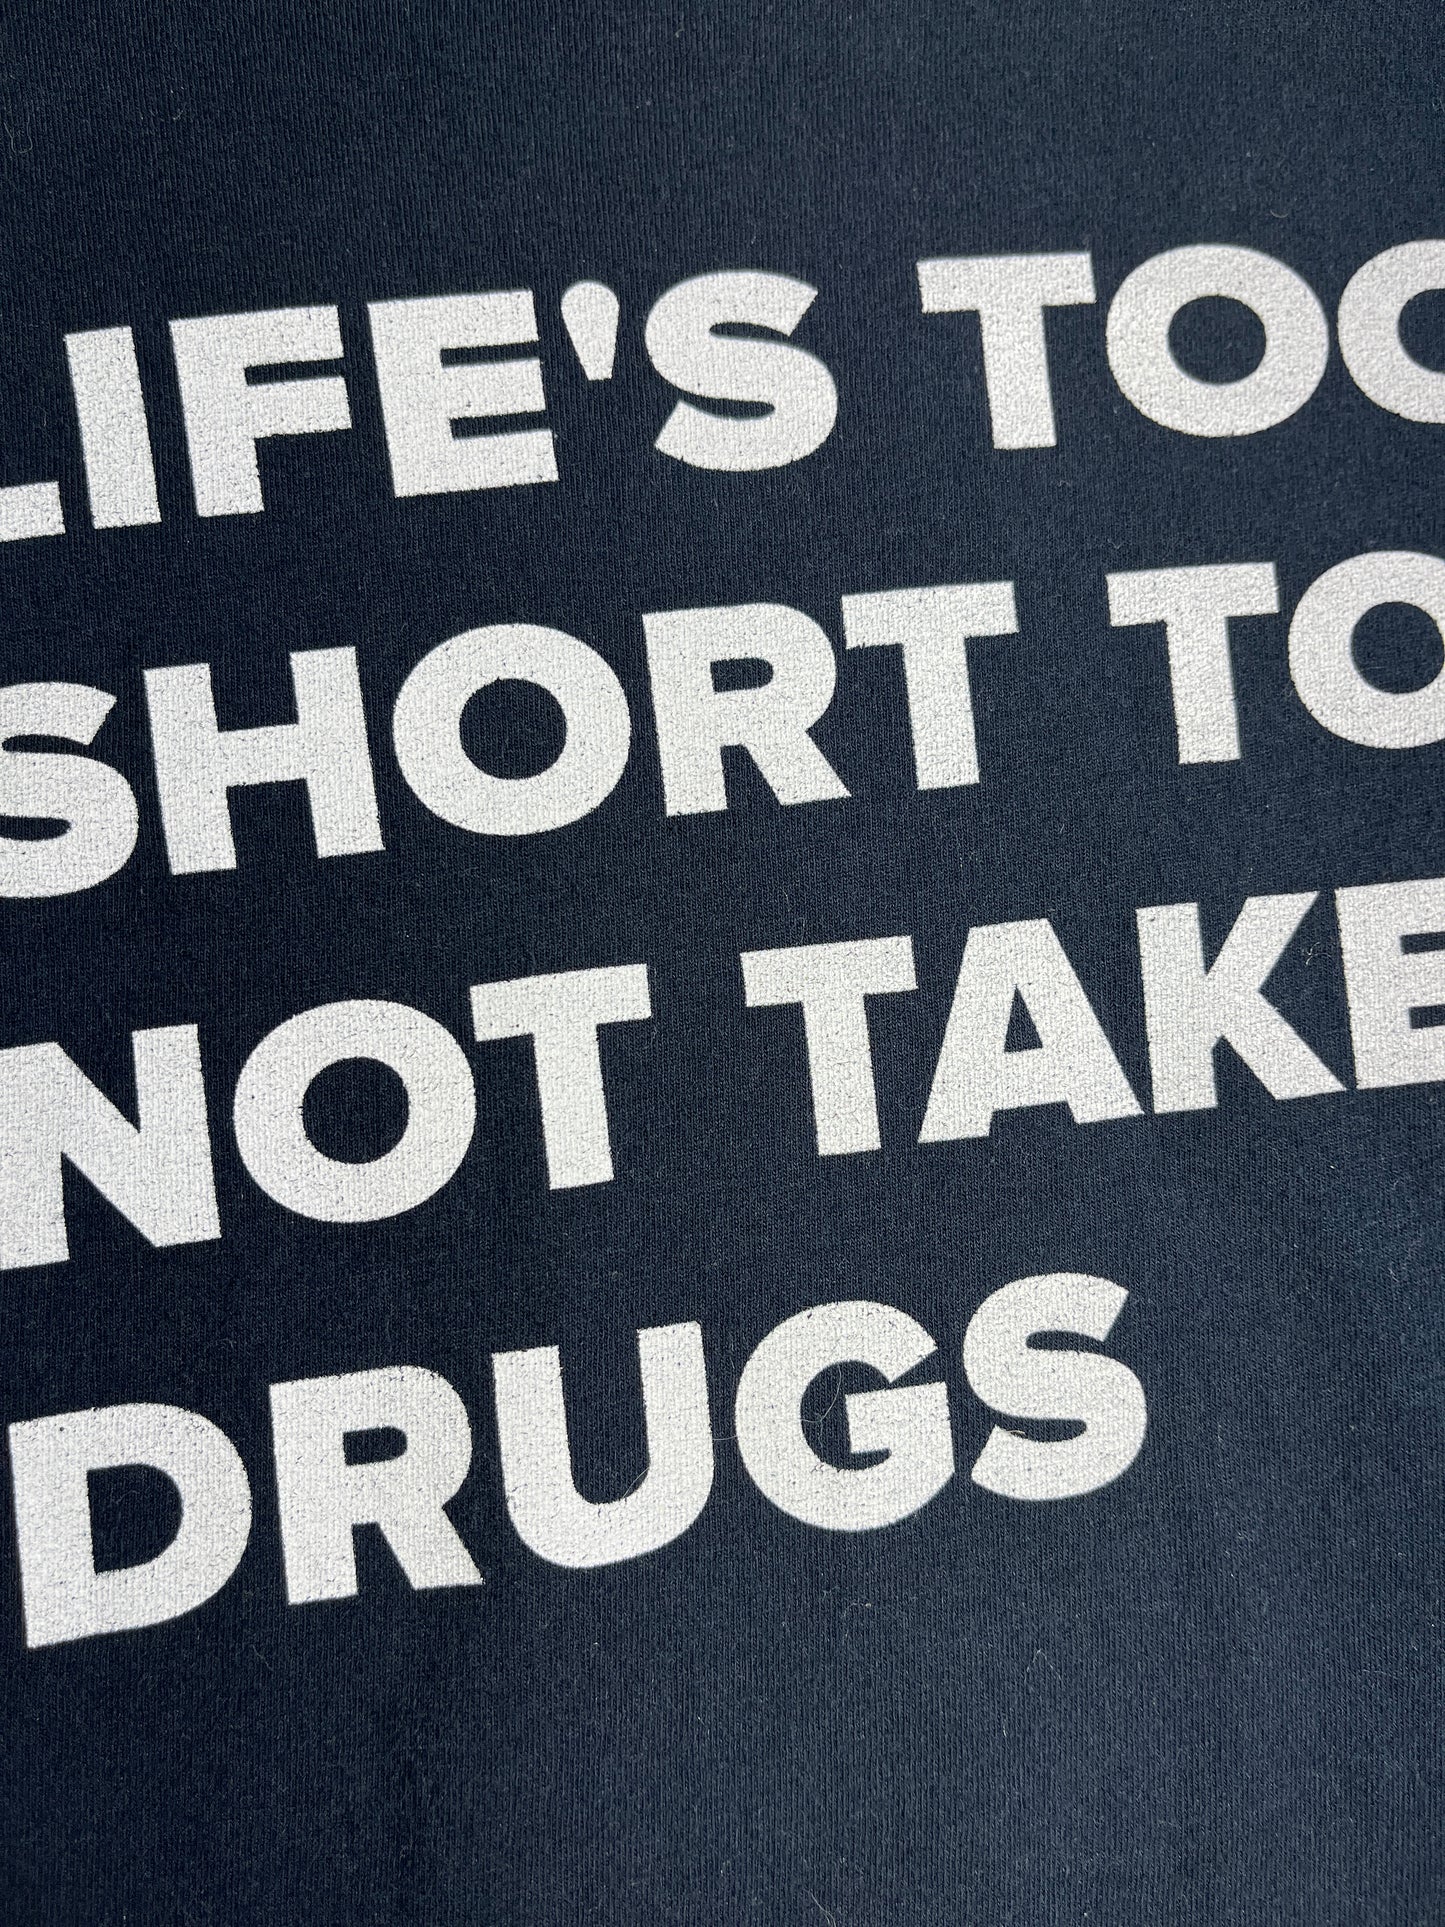 Vintage Life's Too Short To Not Take Drugs T-Shirt Slogan